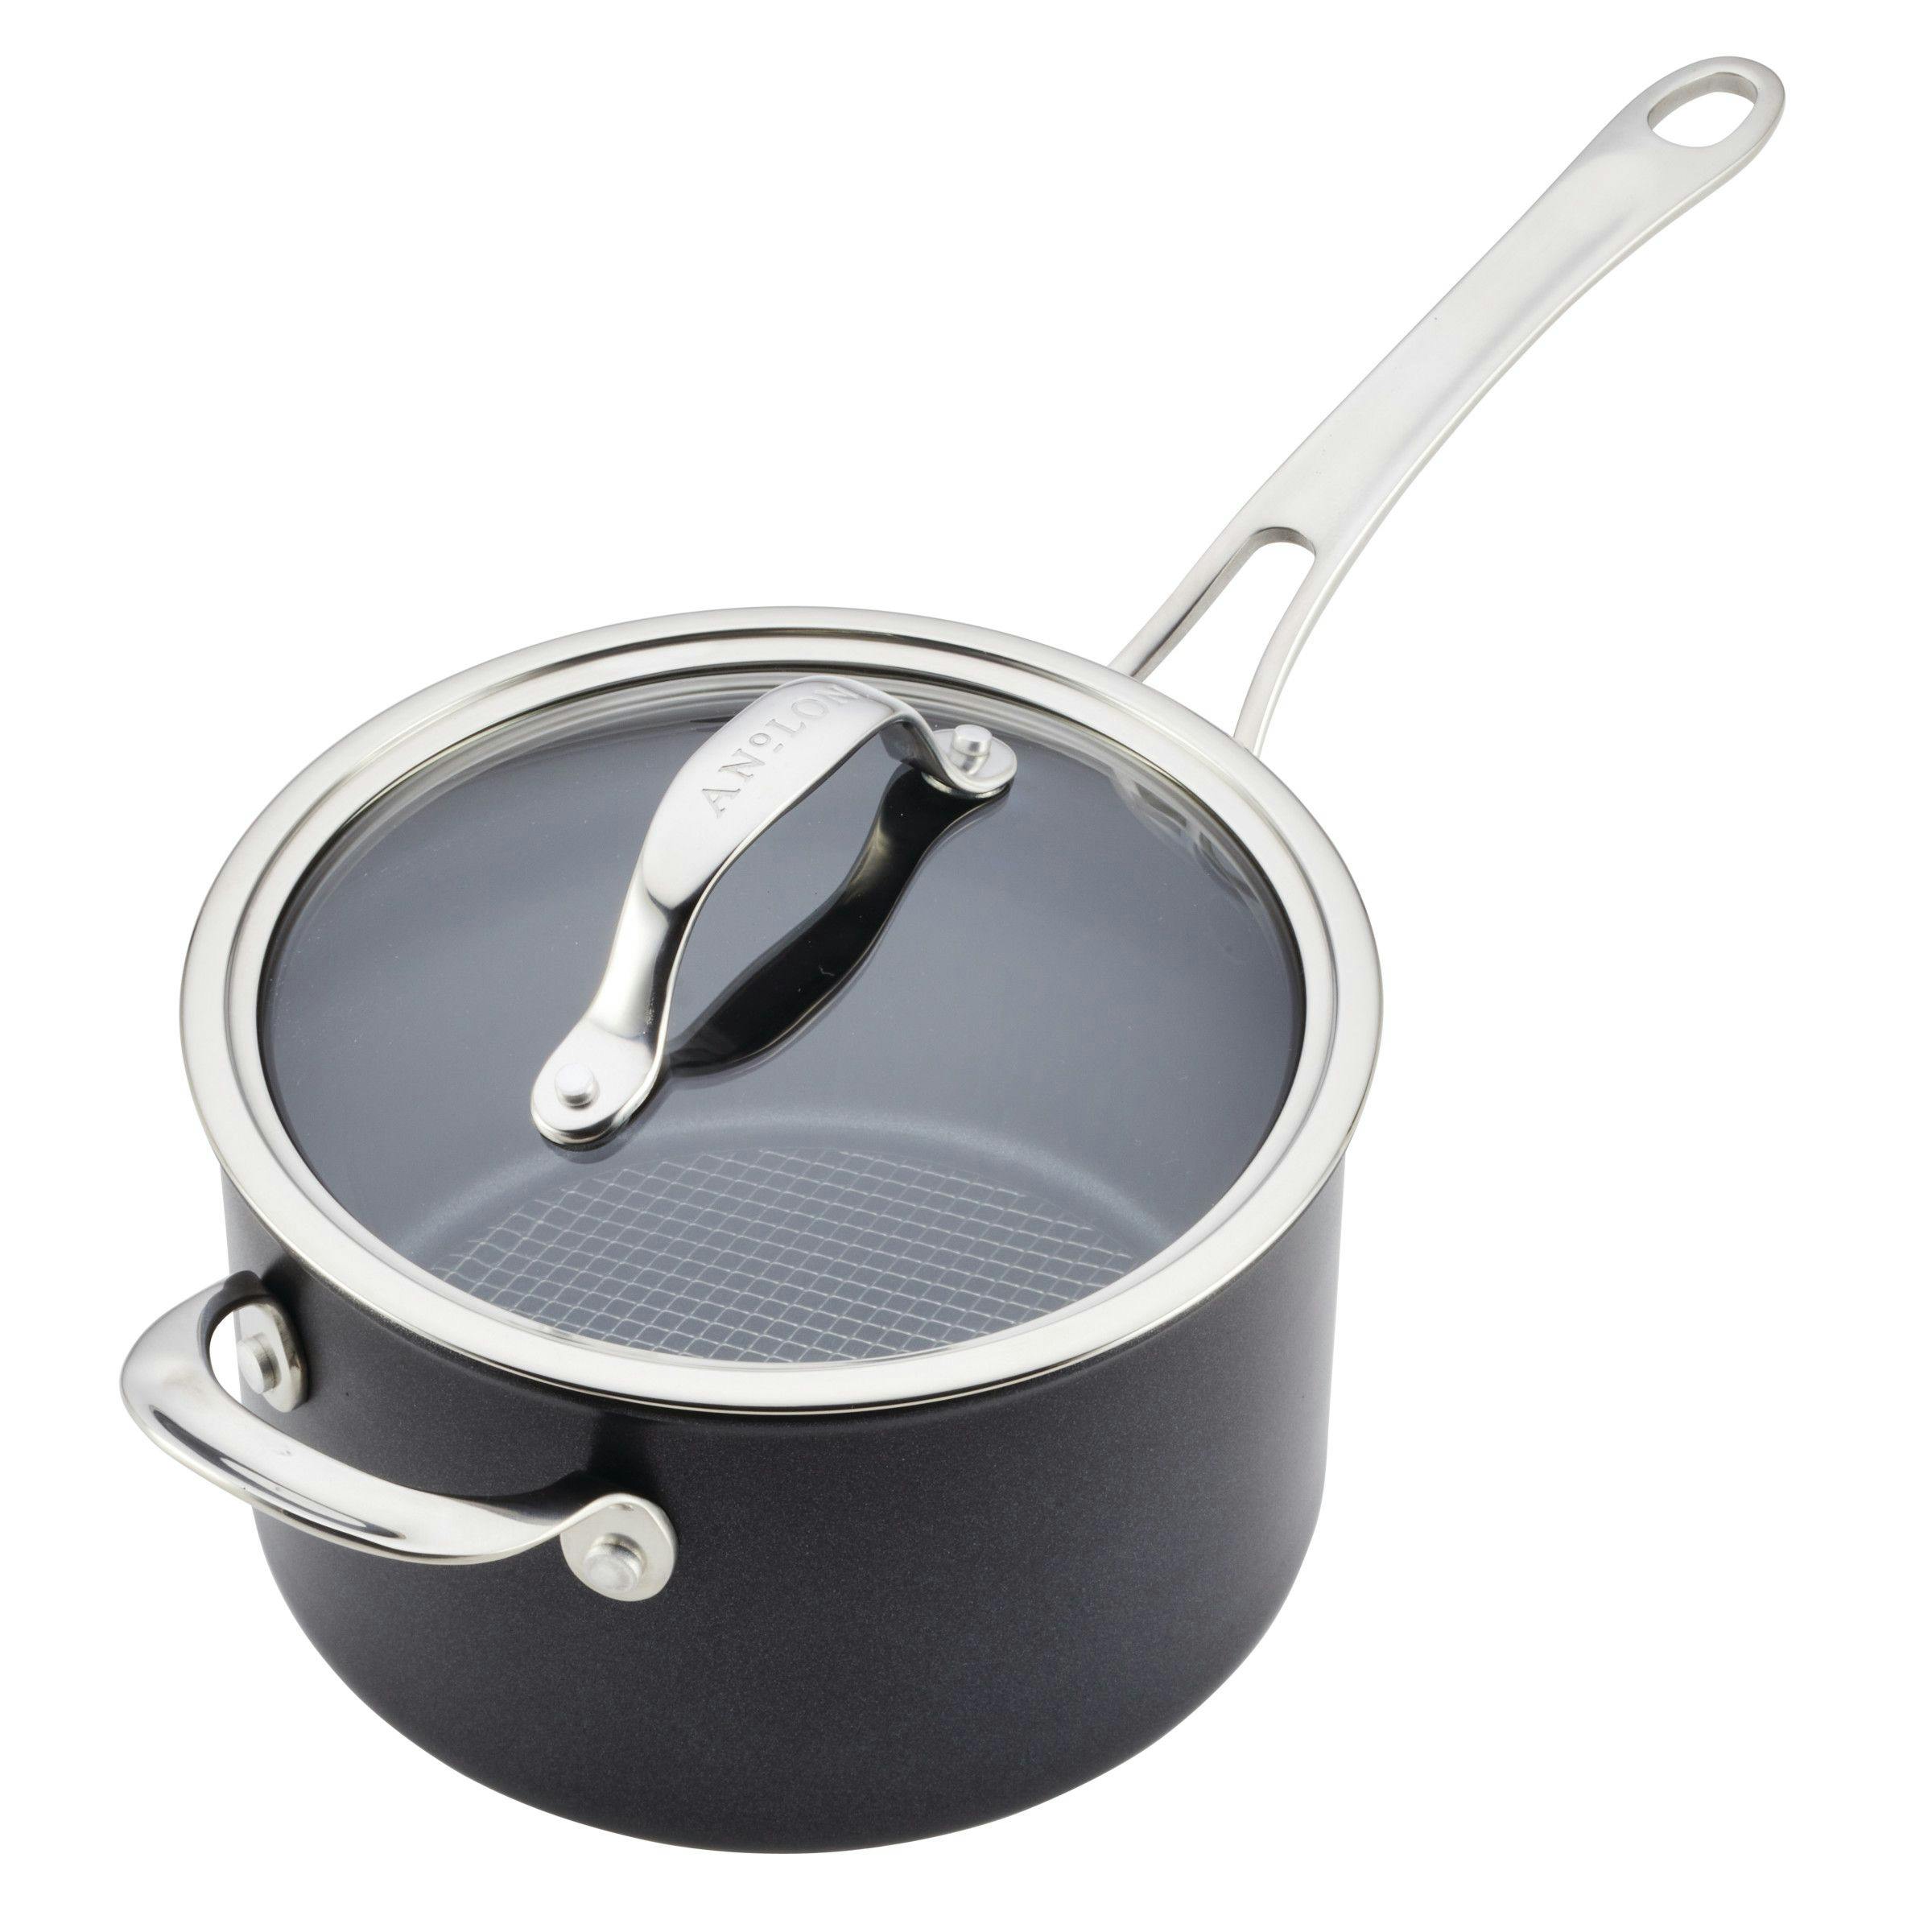 Anolon X Hybrid Nonstick Aluminum Nonstick Cookware Induction Pots and Pans Set, 10-Piece, Super Dark Gray